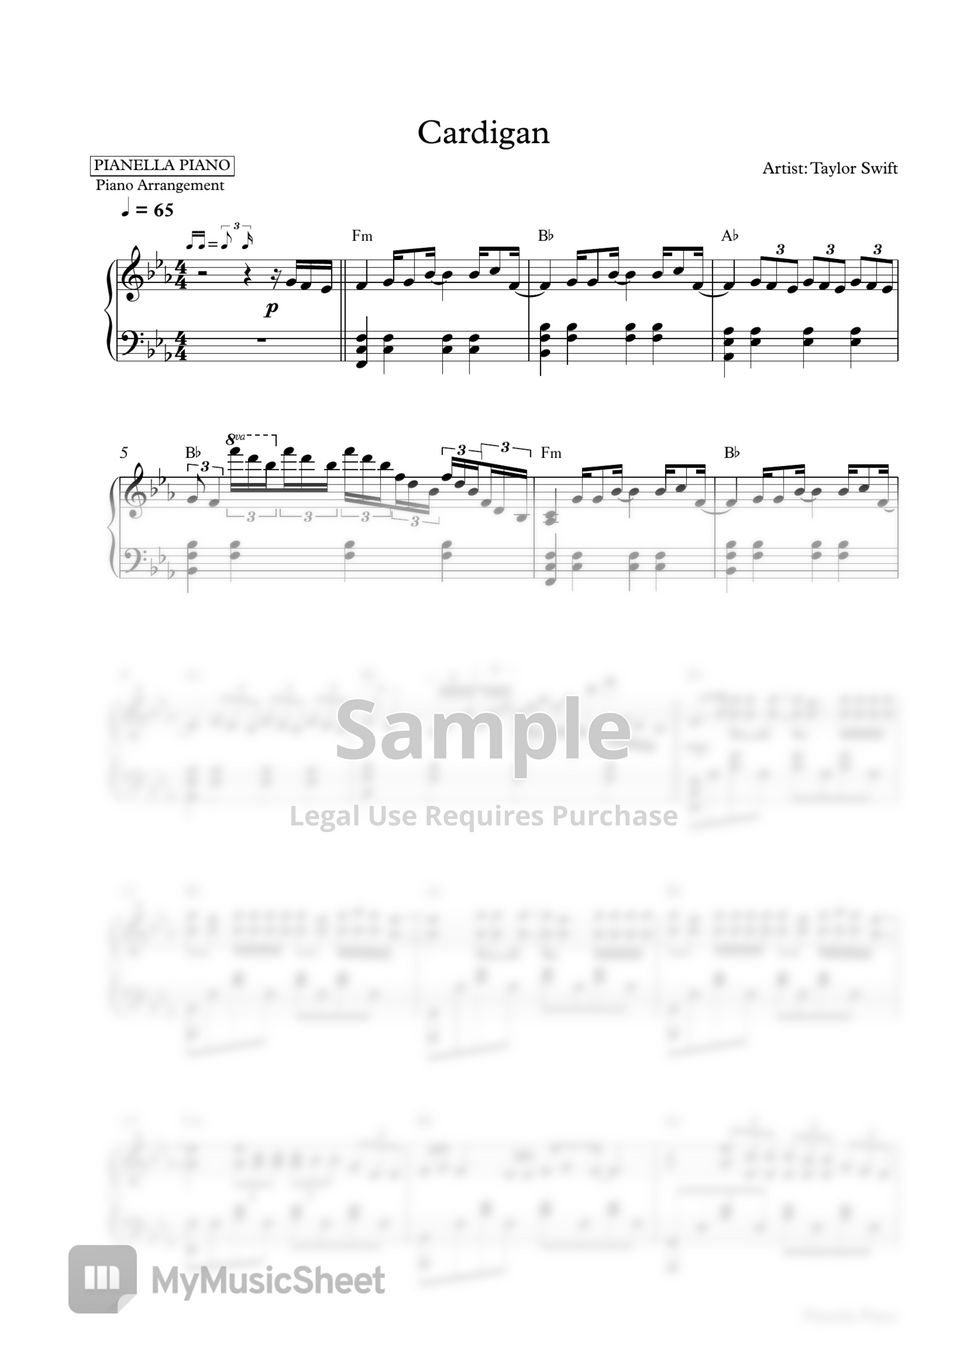 Taylor Swift - Cardigan (Piano Sheet) by Pianella Piano